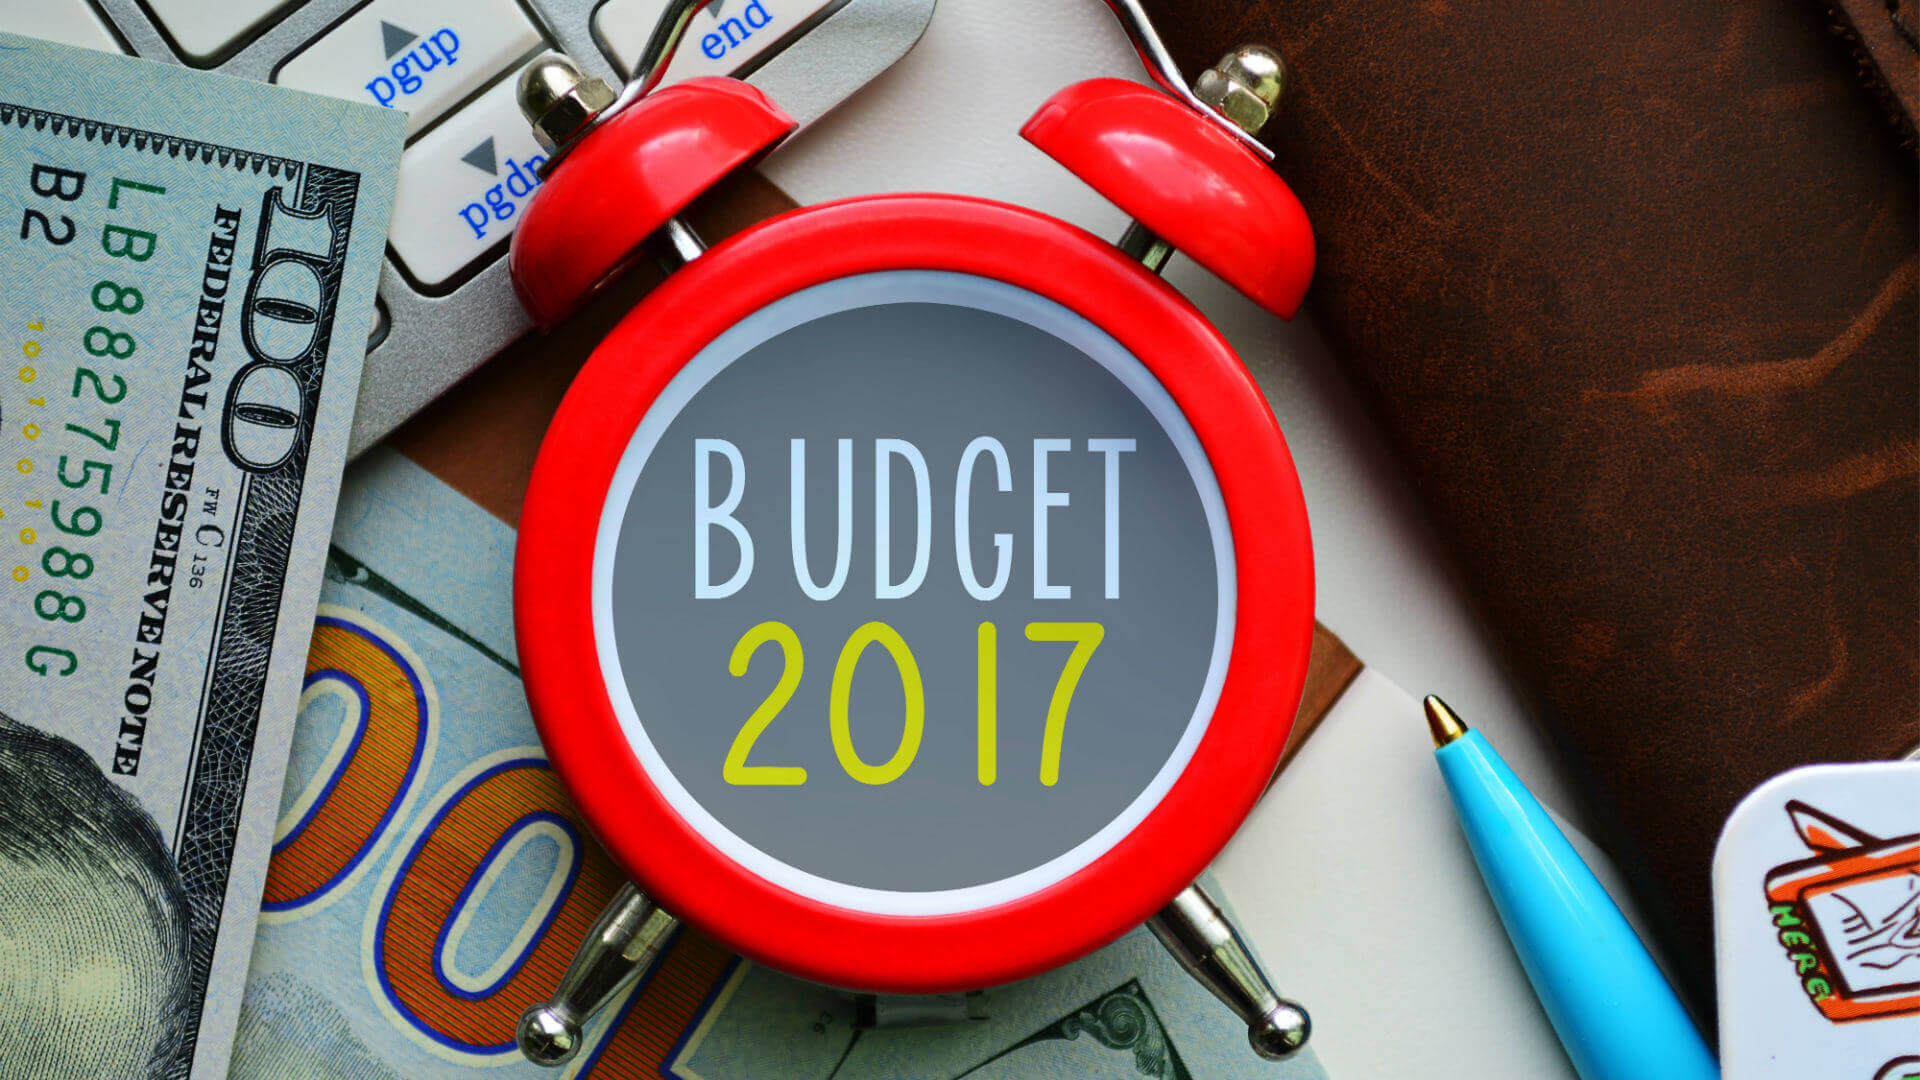 2017-budget-ss-1920